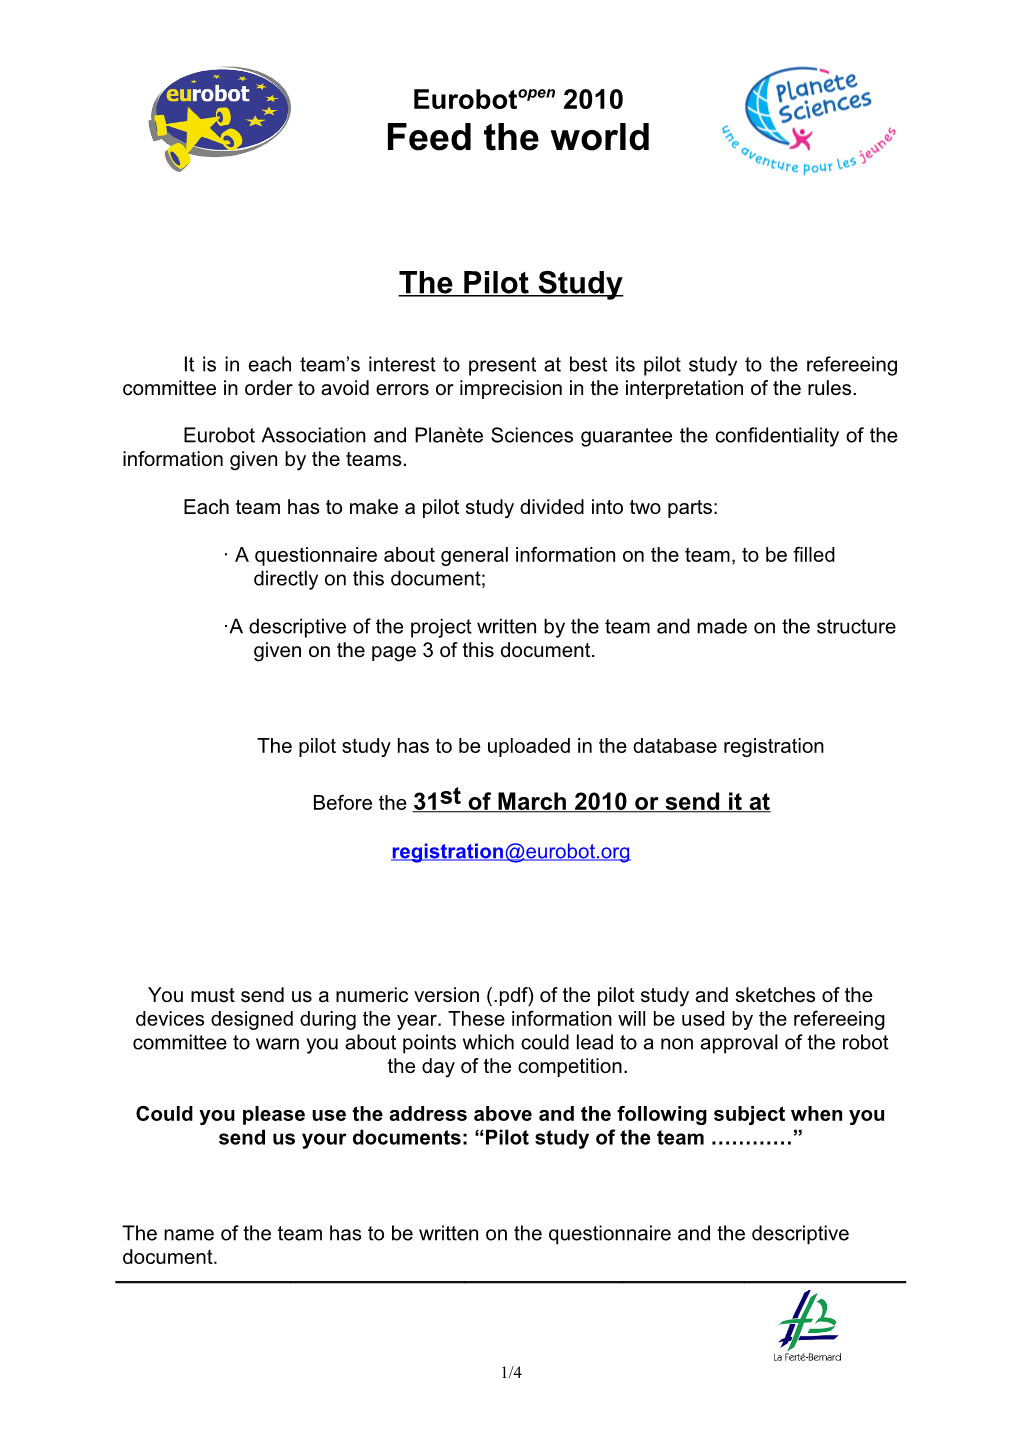 The Pilot Study